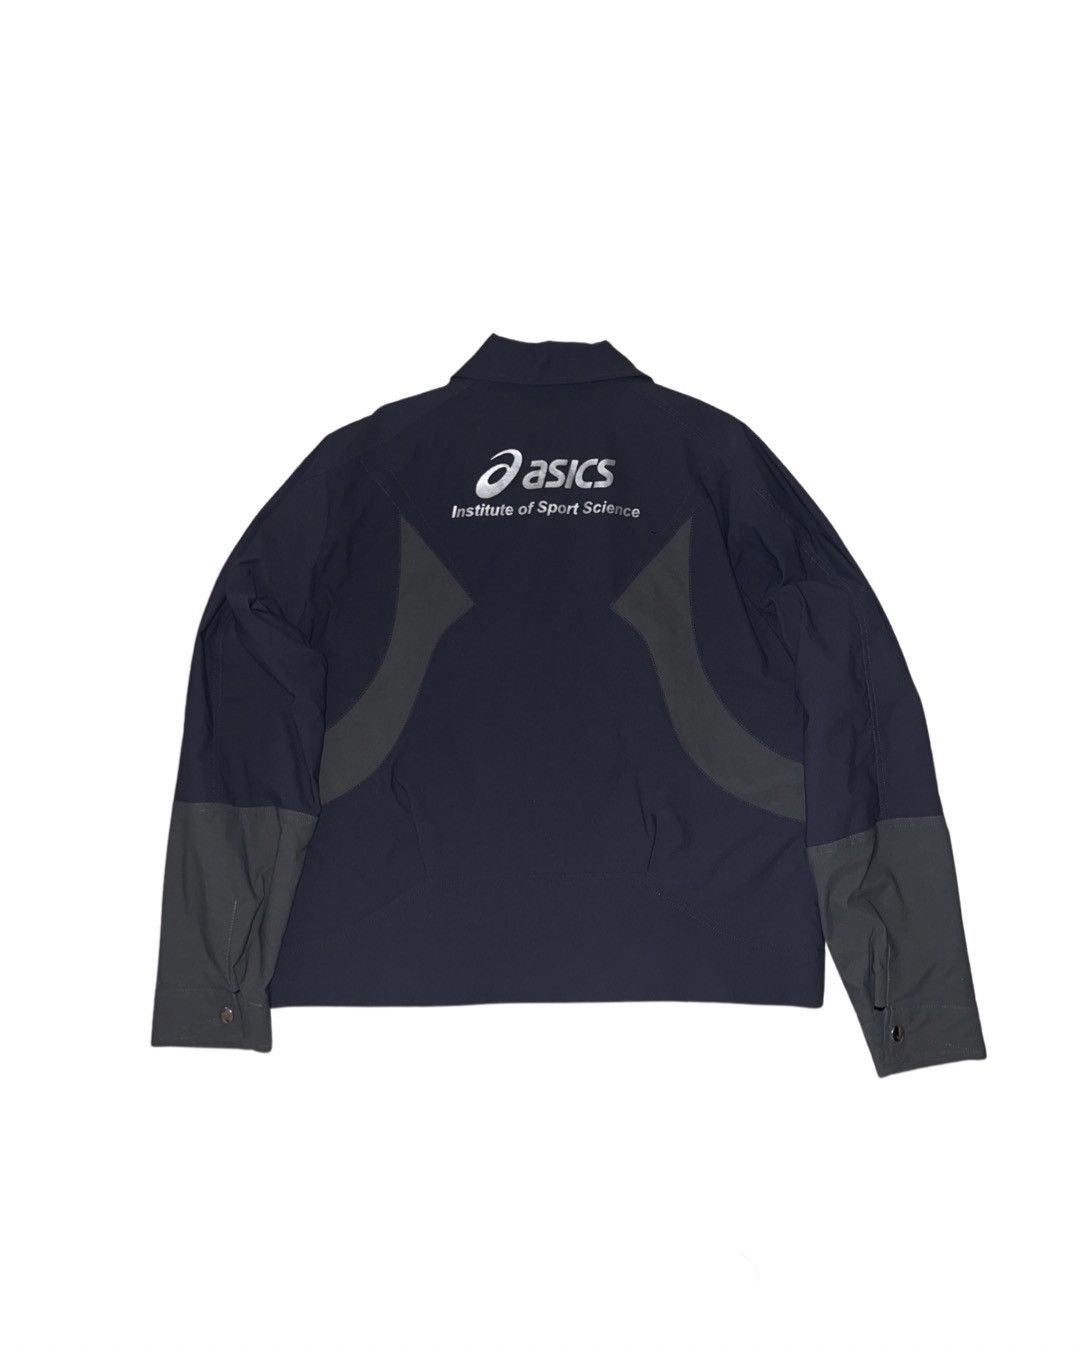 Asics Kobe uniform jacket | Grailed